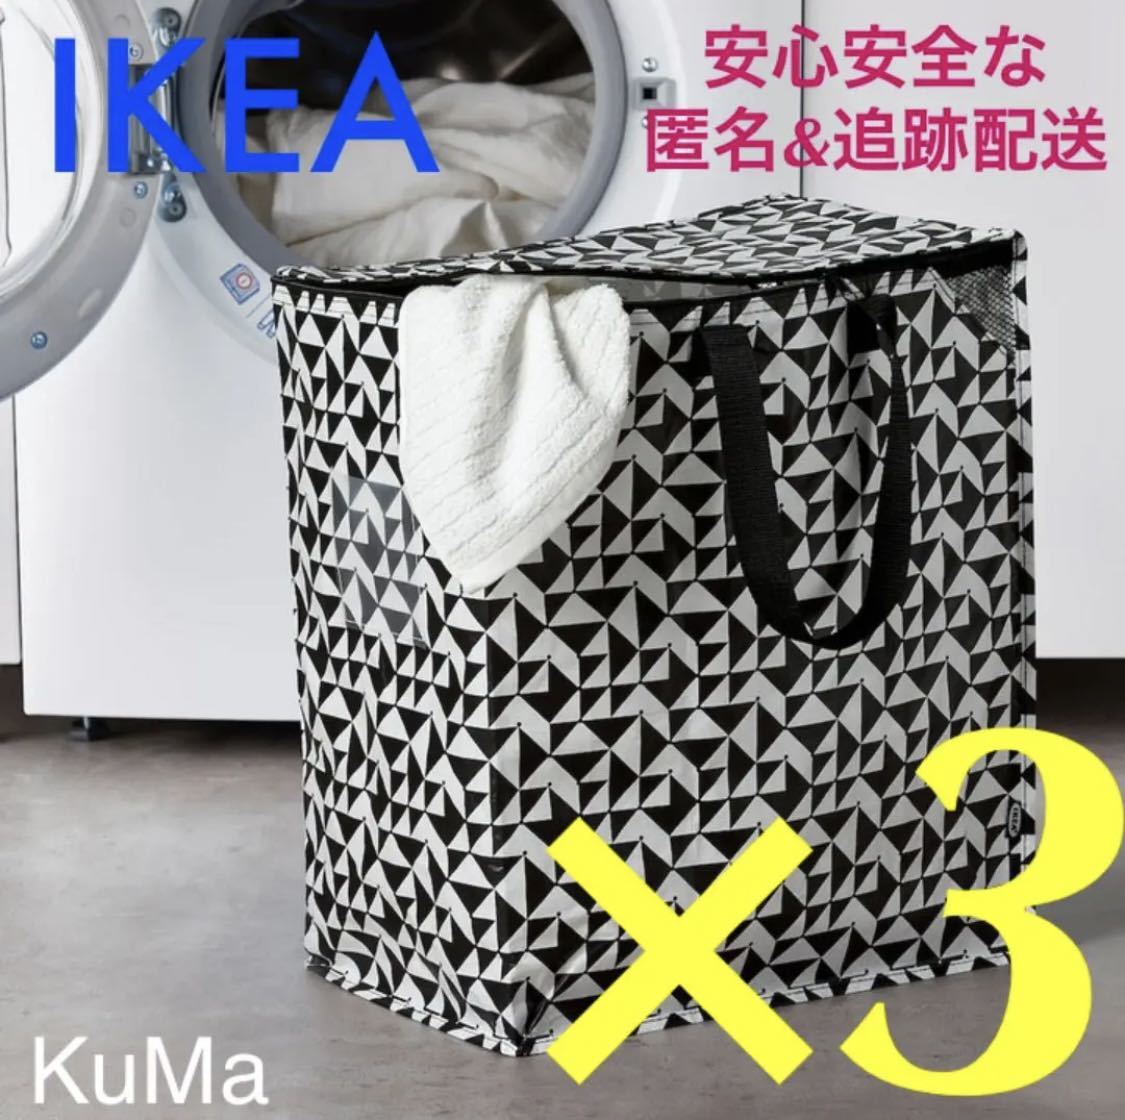 IKEAknala3 шт. комплект место хранения сумка минут другой сумка мусорная корзина . изменение переезд Ikea 